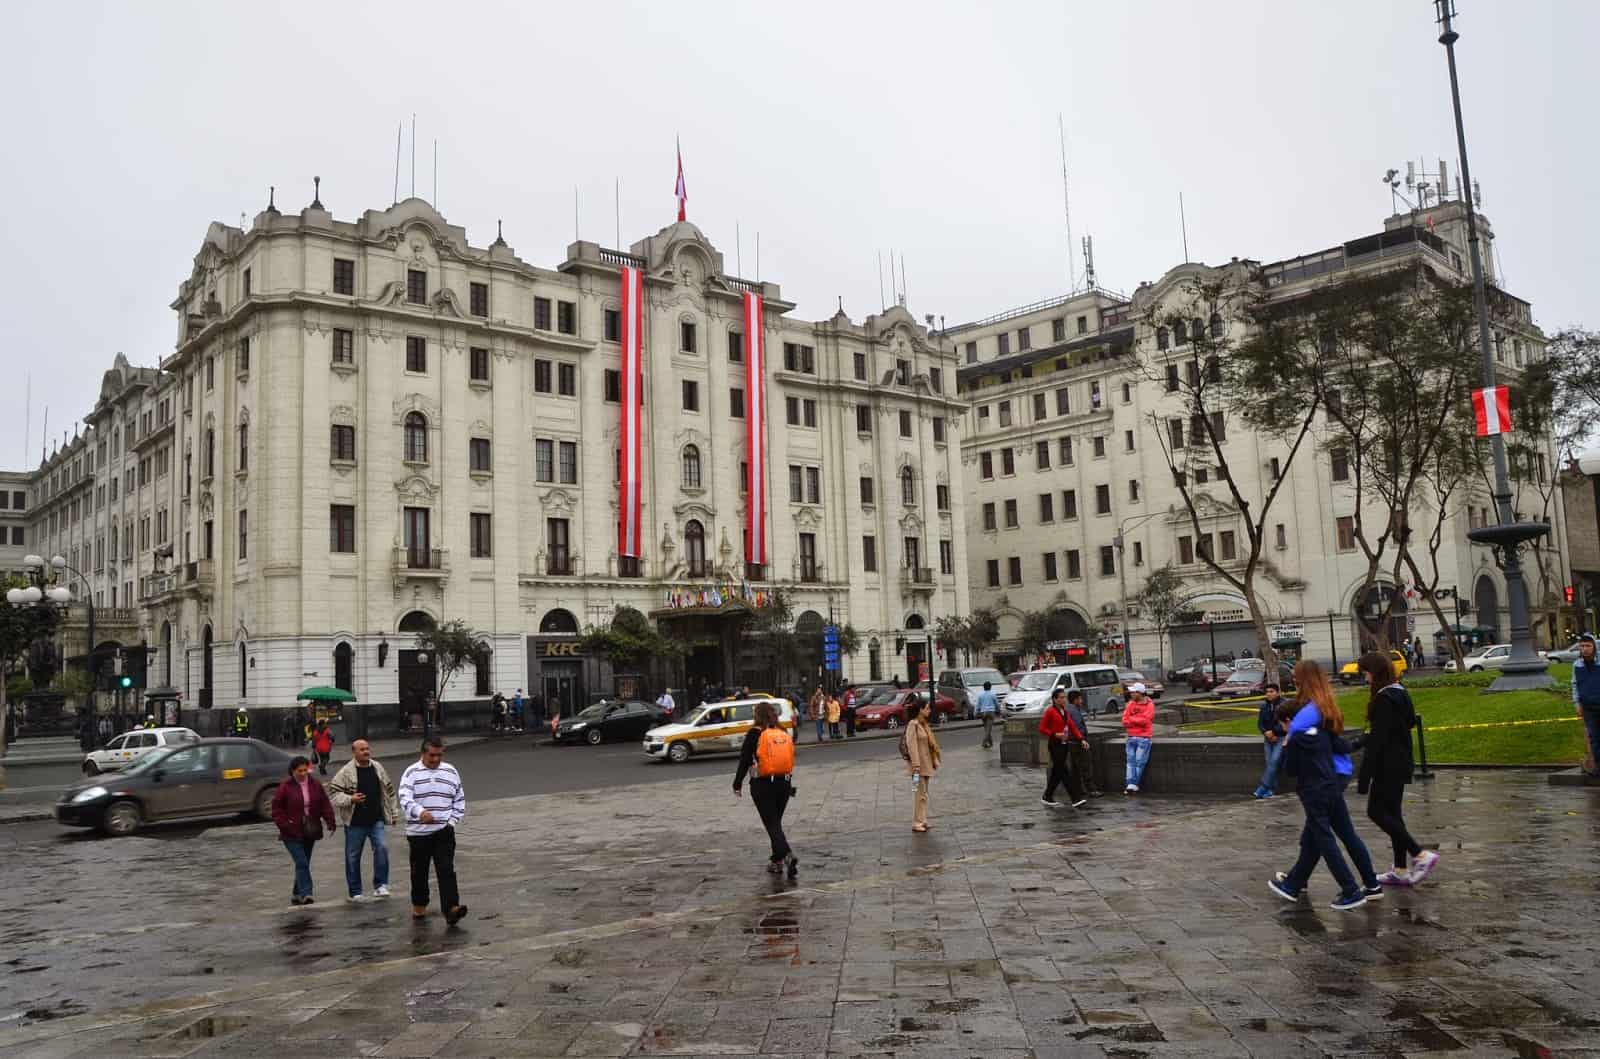 Gran Hotel Bolívar at Plaza San Martín in Lima, Peru